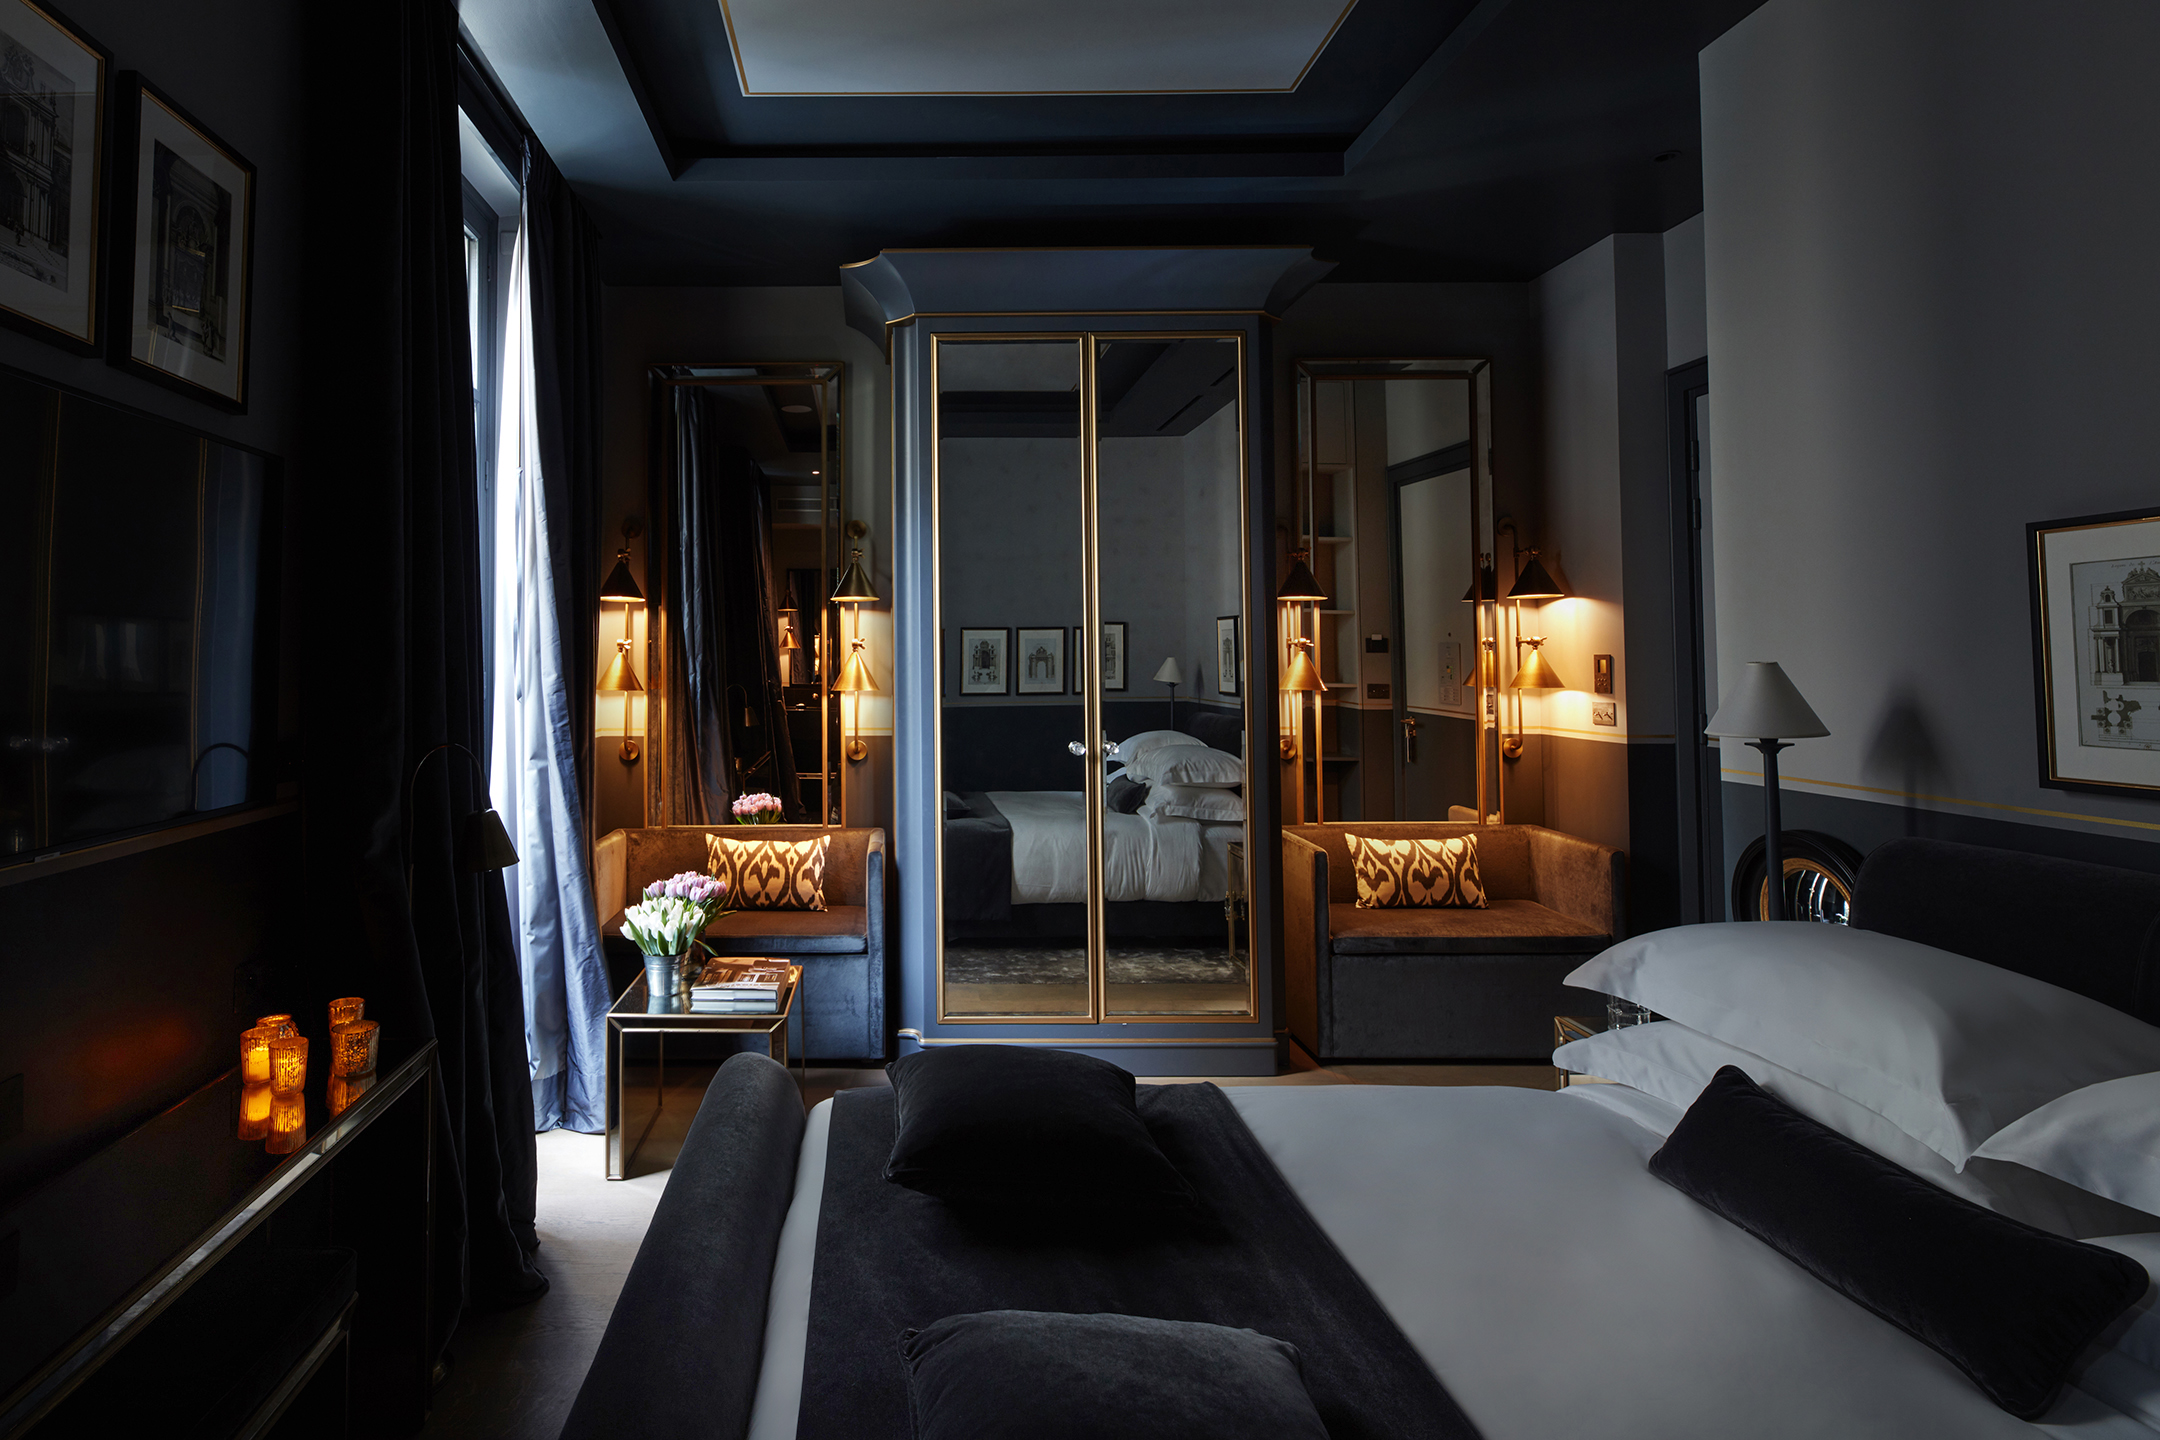 Windsor Suite at Monsieur George, interior designed by Anouska Hempel – Effect Magazine